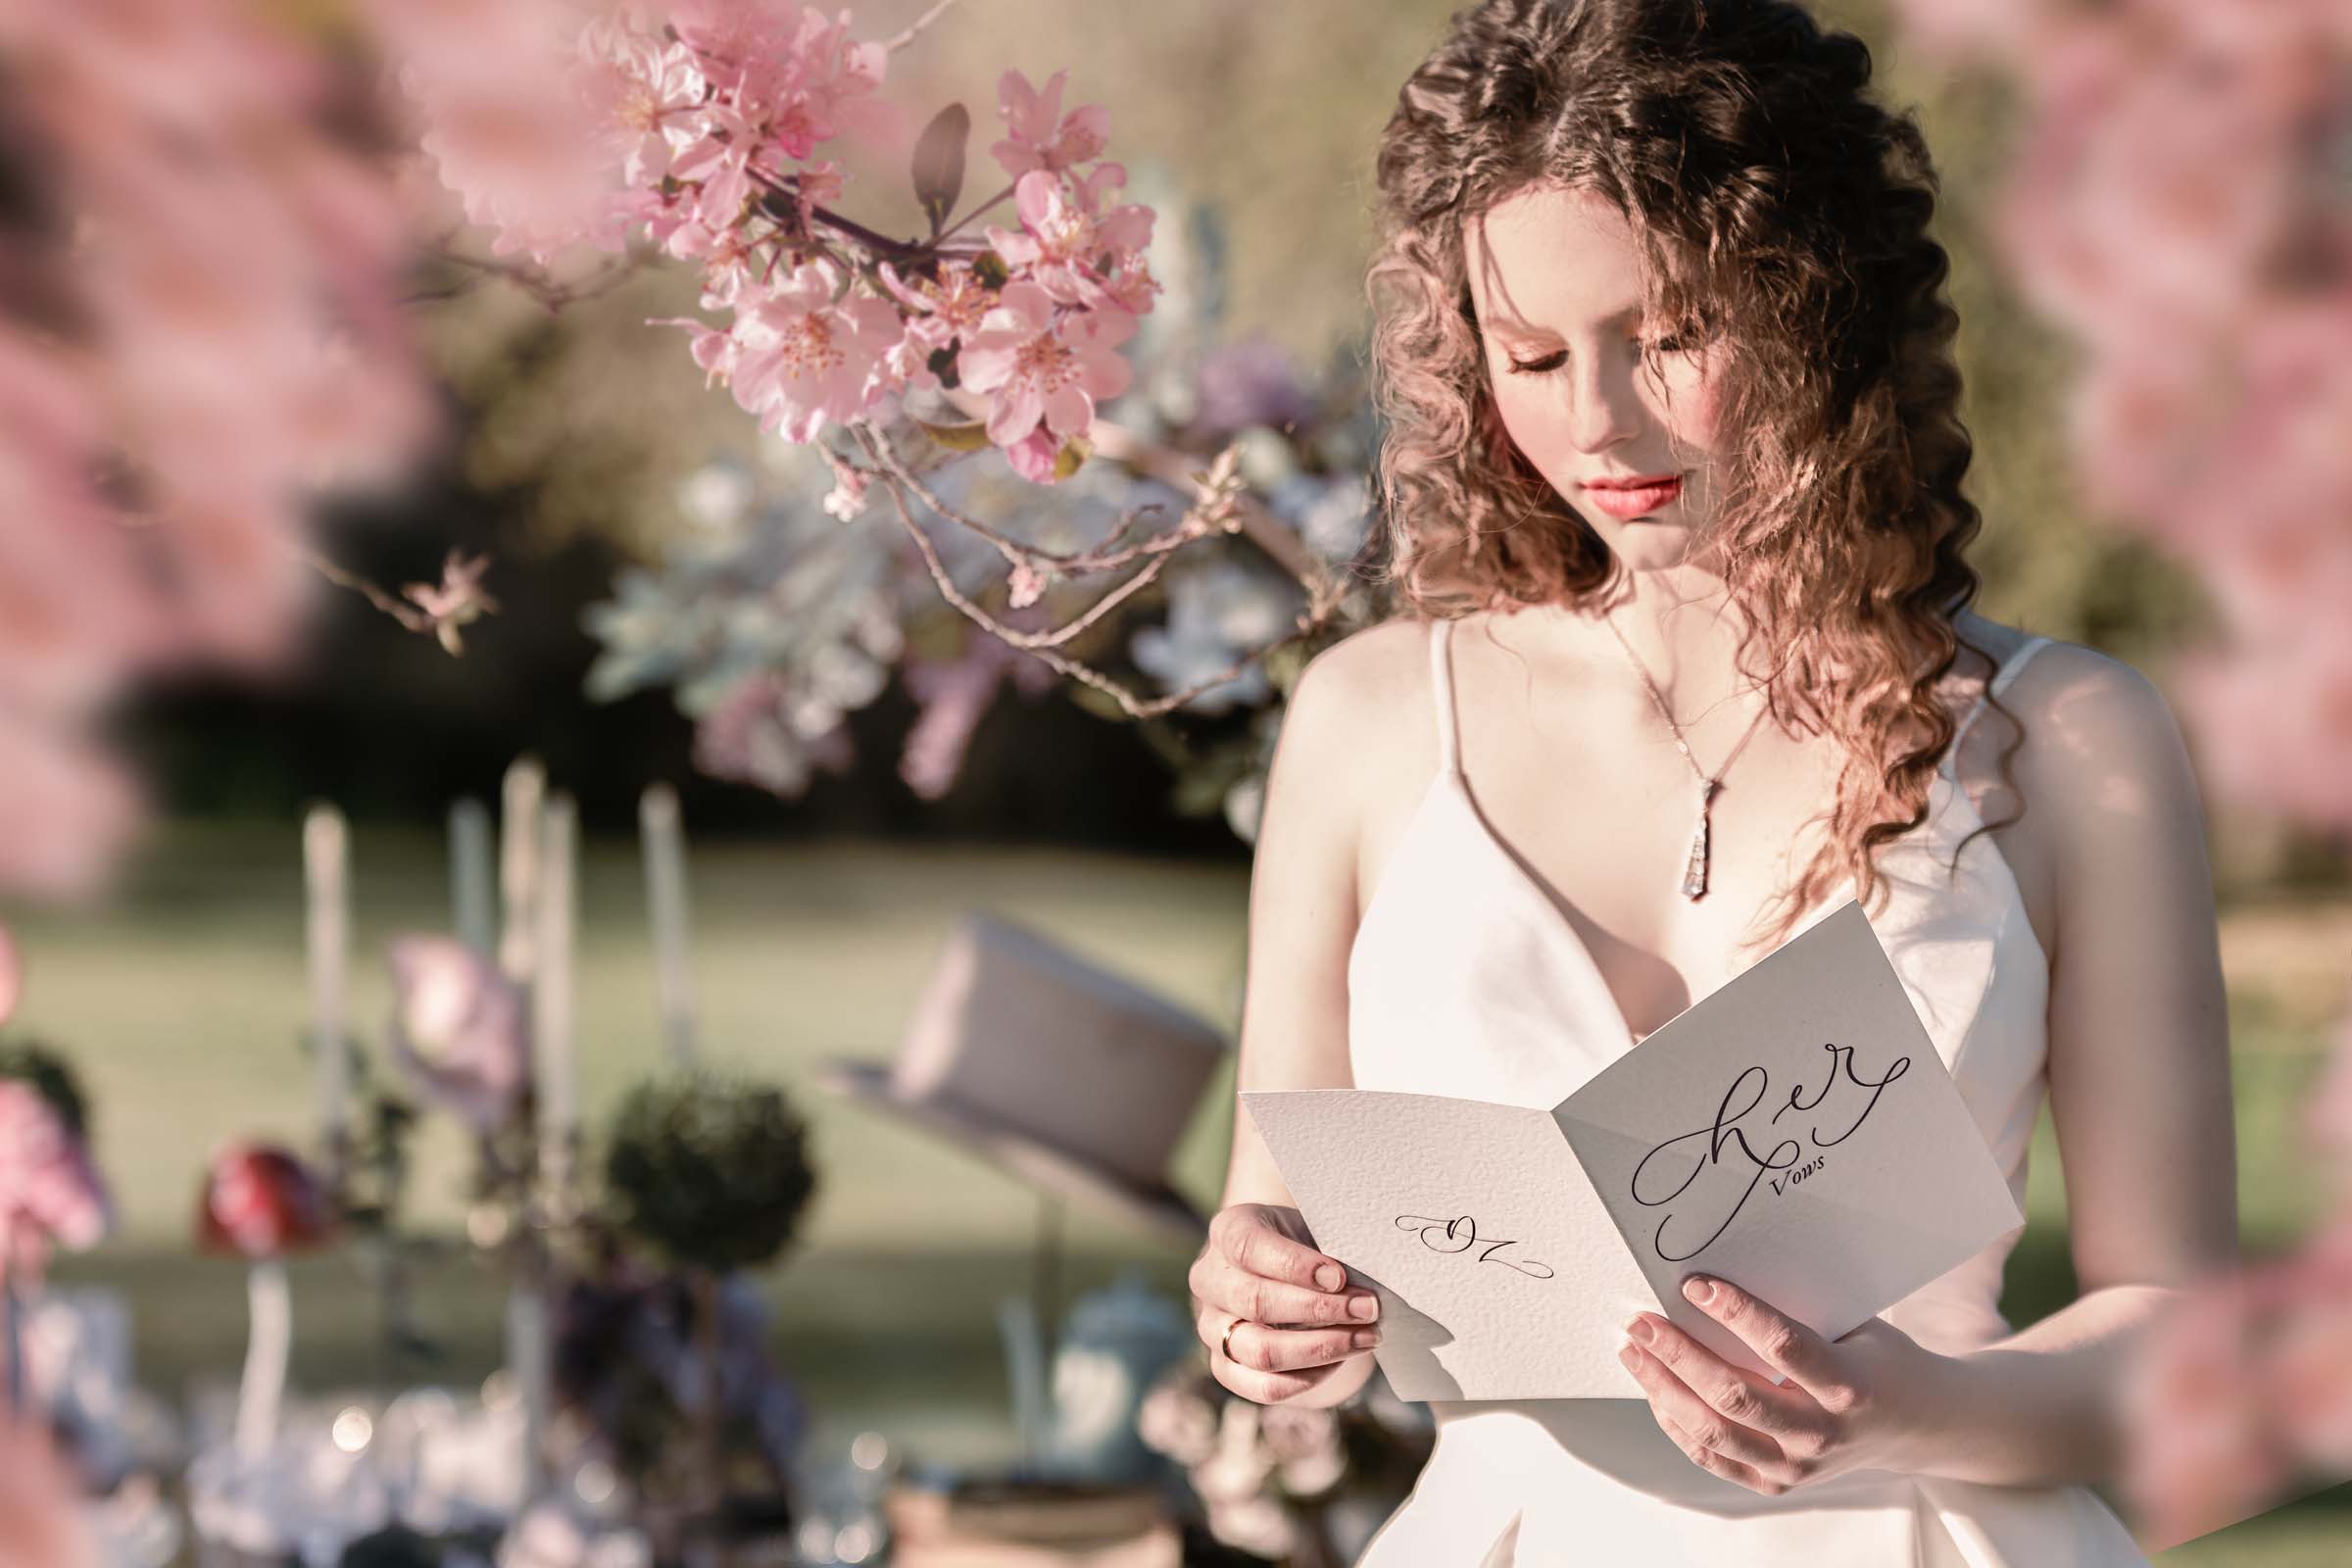 Wedding Readings: 15 Romantic Wedding Reading Ideas (So Moving They’ll Make Everyone Cry!)